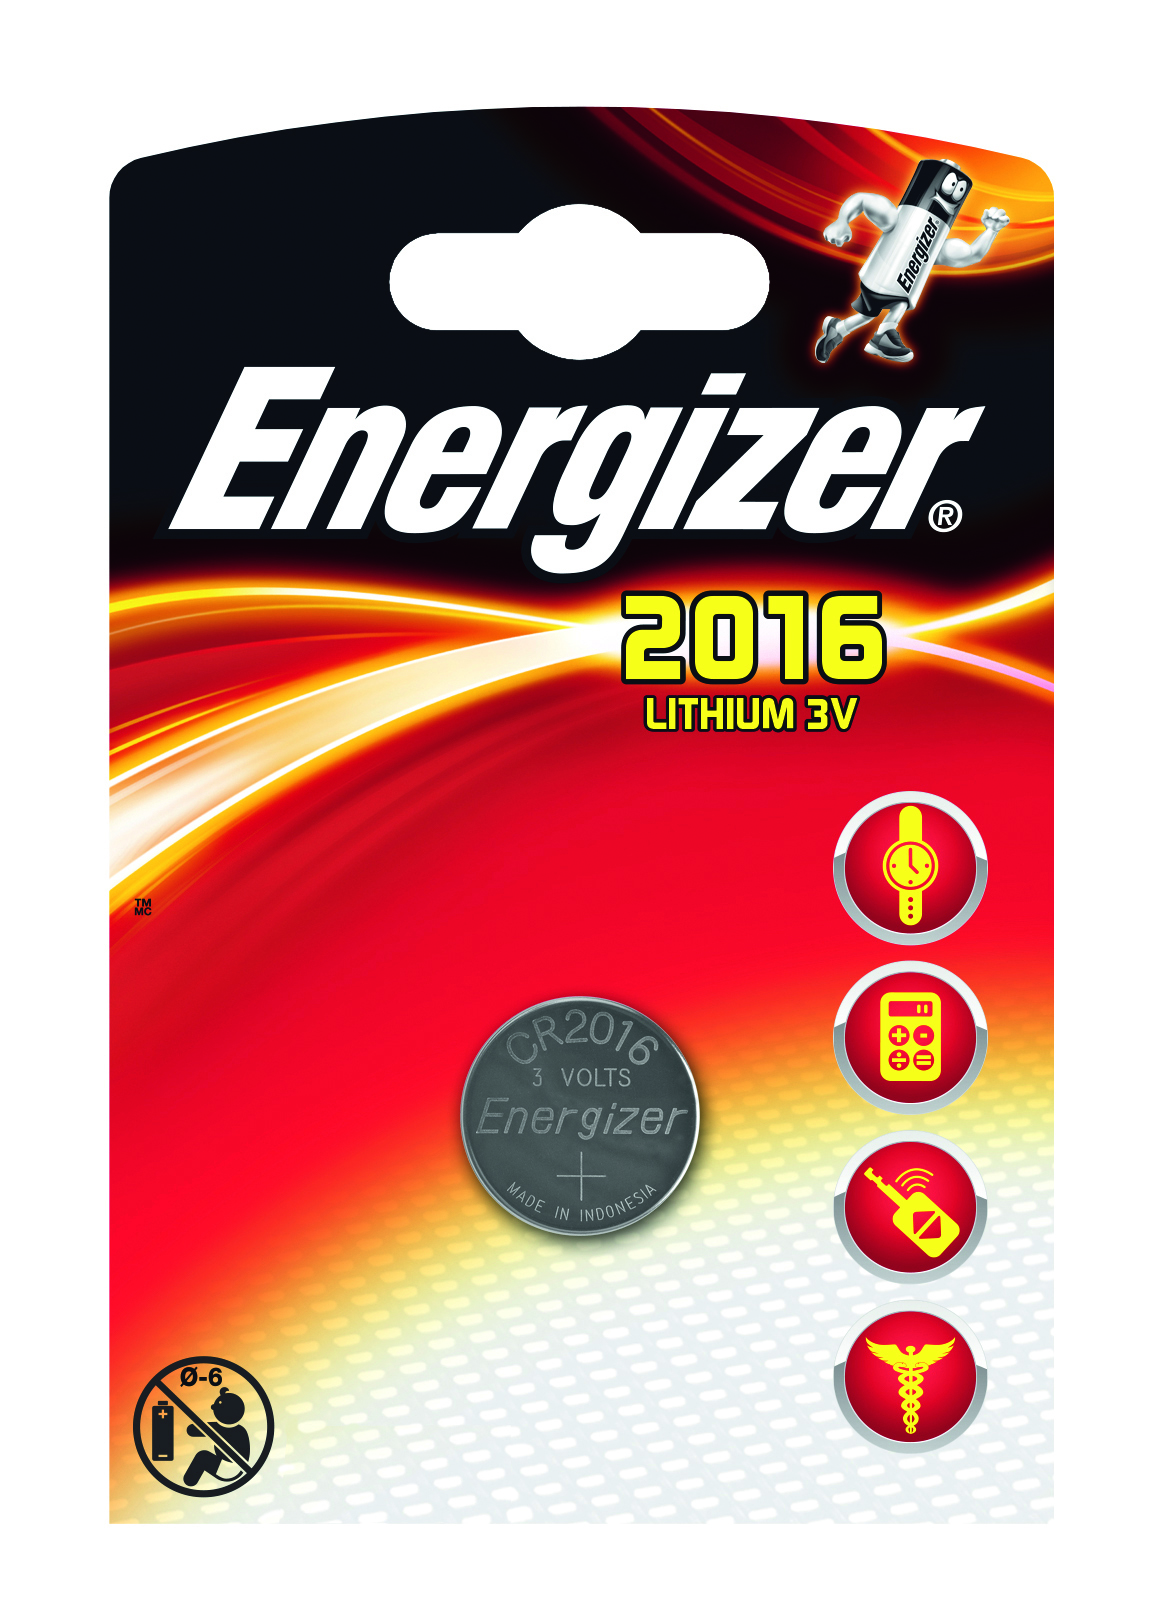 Energizer 2016 lithium button cell